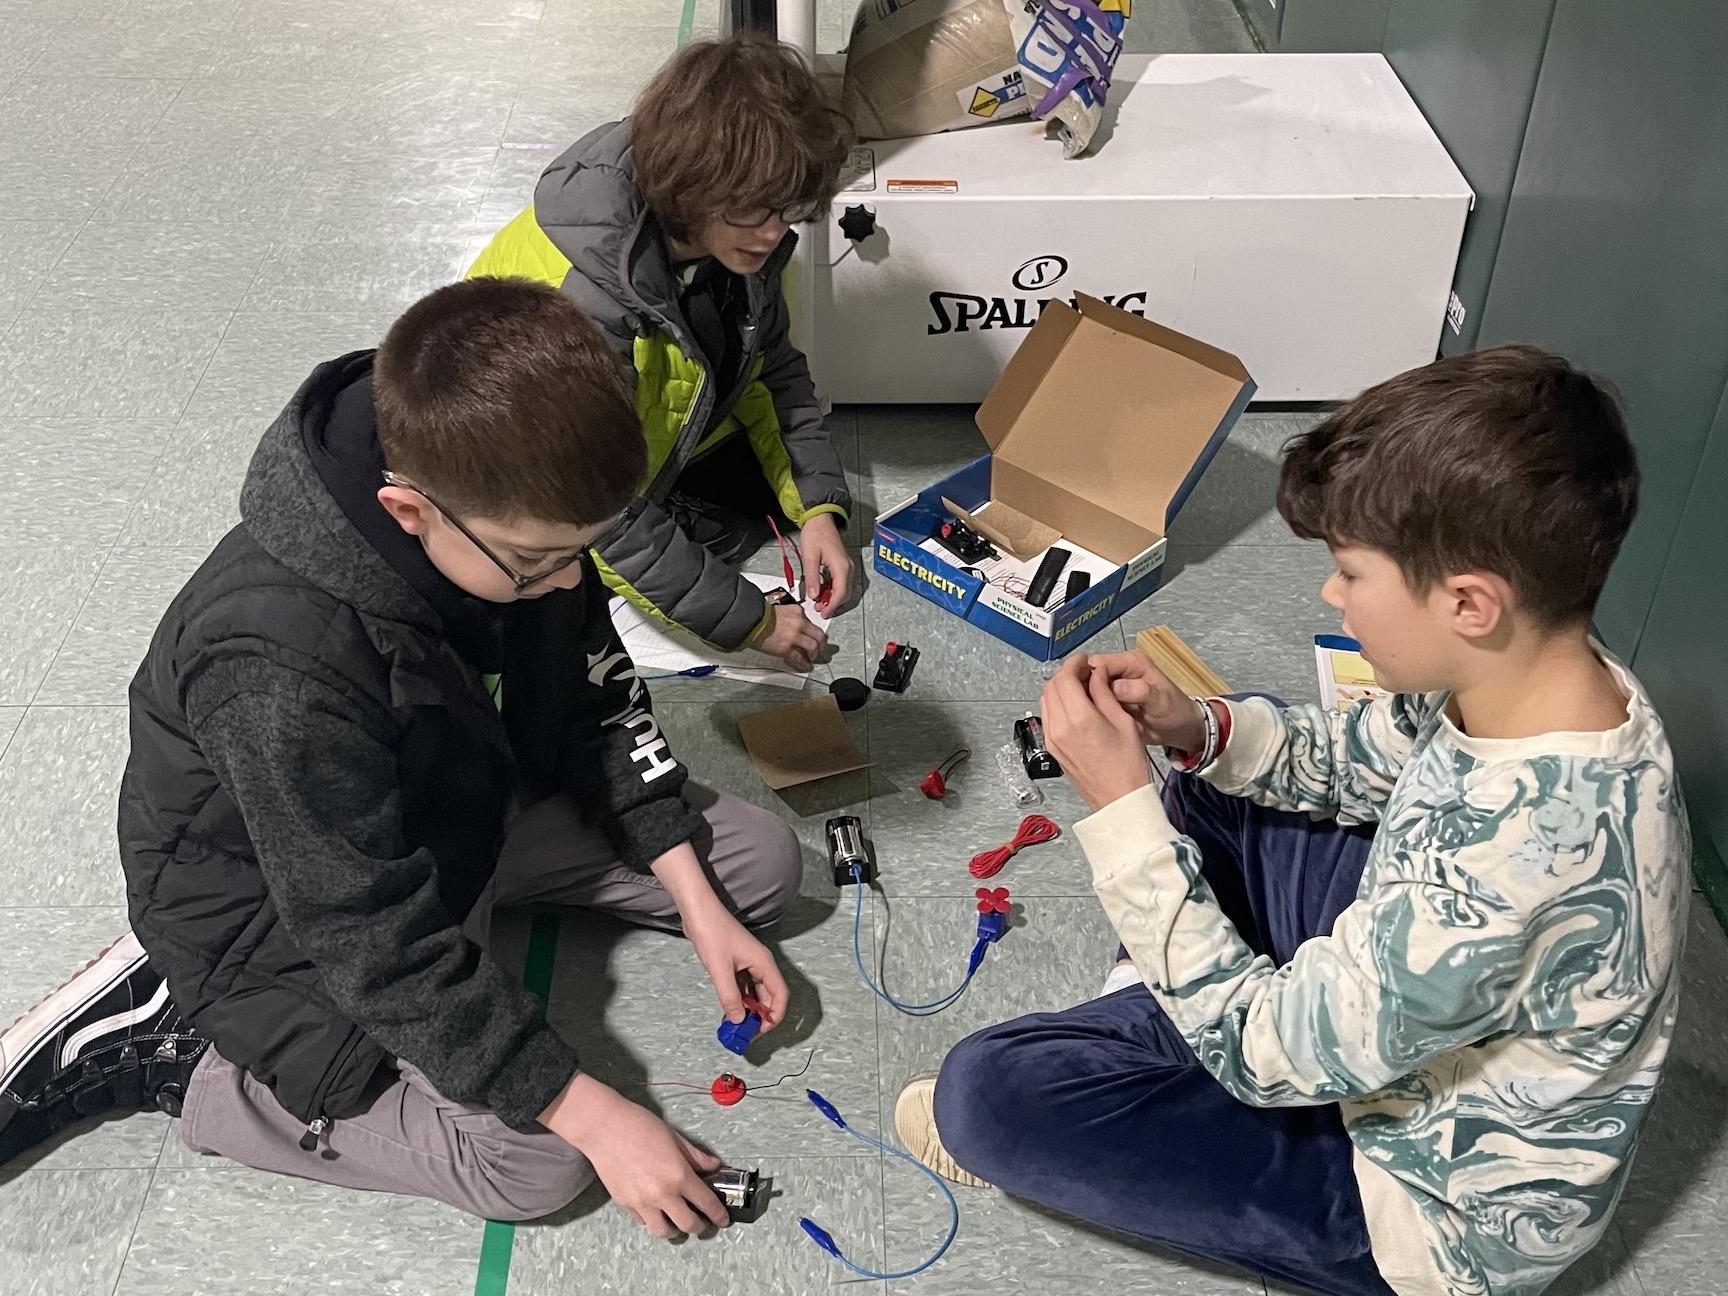 5th-graders Joseph Raithel, Cruz Castaneda, and Jack Fry explore connecting circuits to create electricity